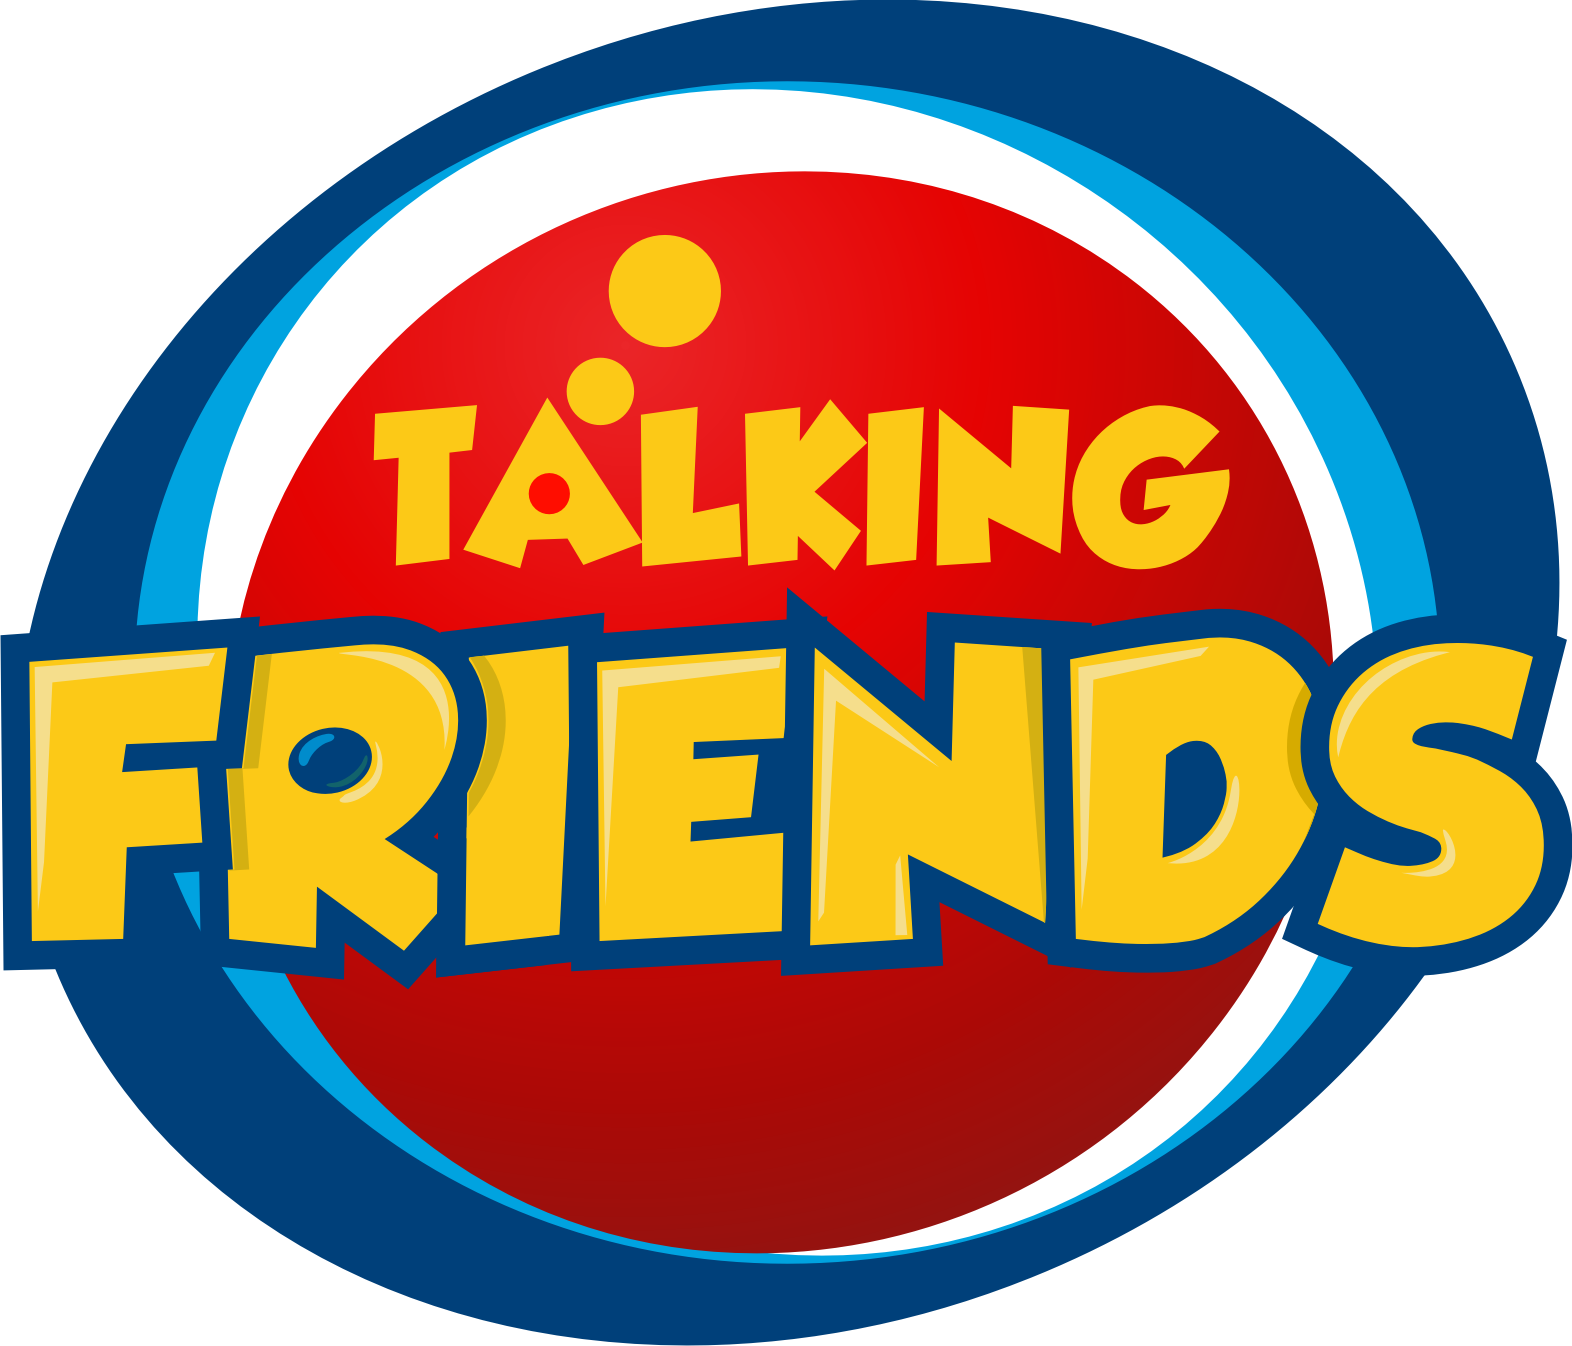 Talking friends. Friends логотип. Talking Tom логотип. Talking Tom and friends logo. Talking friends apk